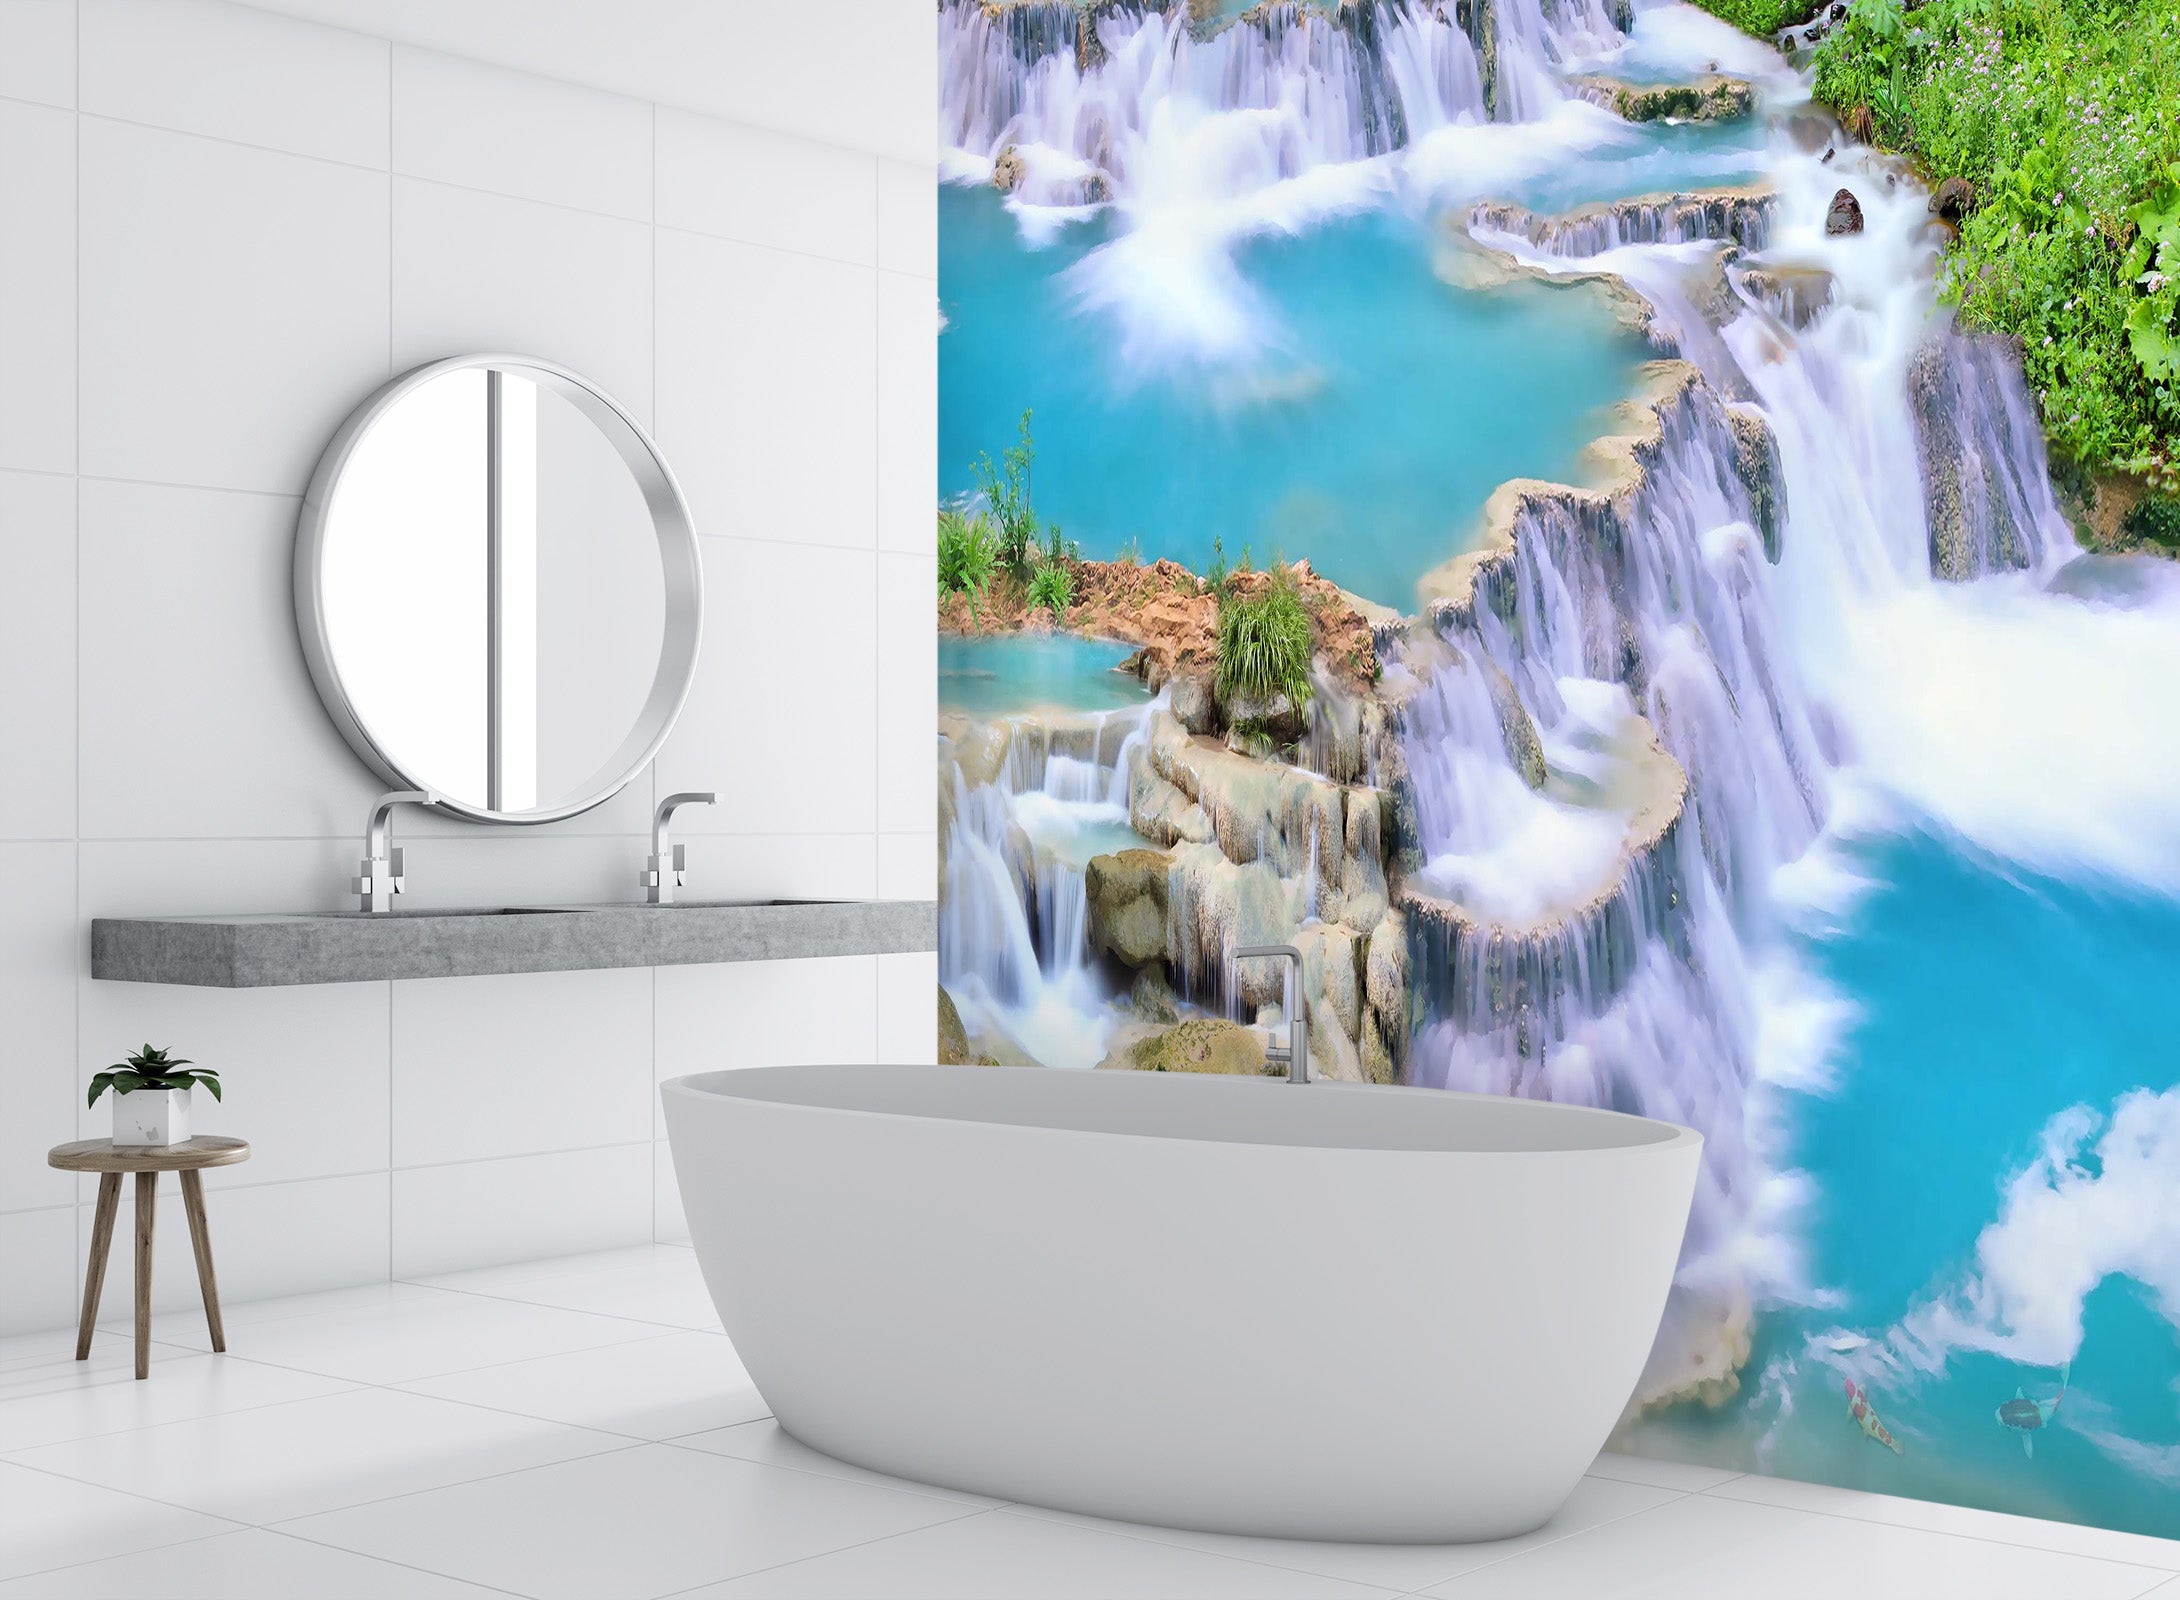 3D Canyon Waterfall 1629 Wall Murals